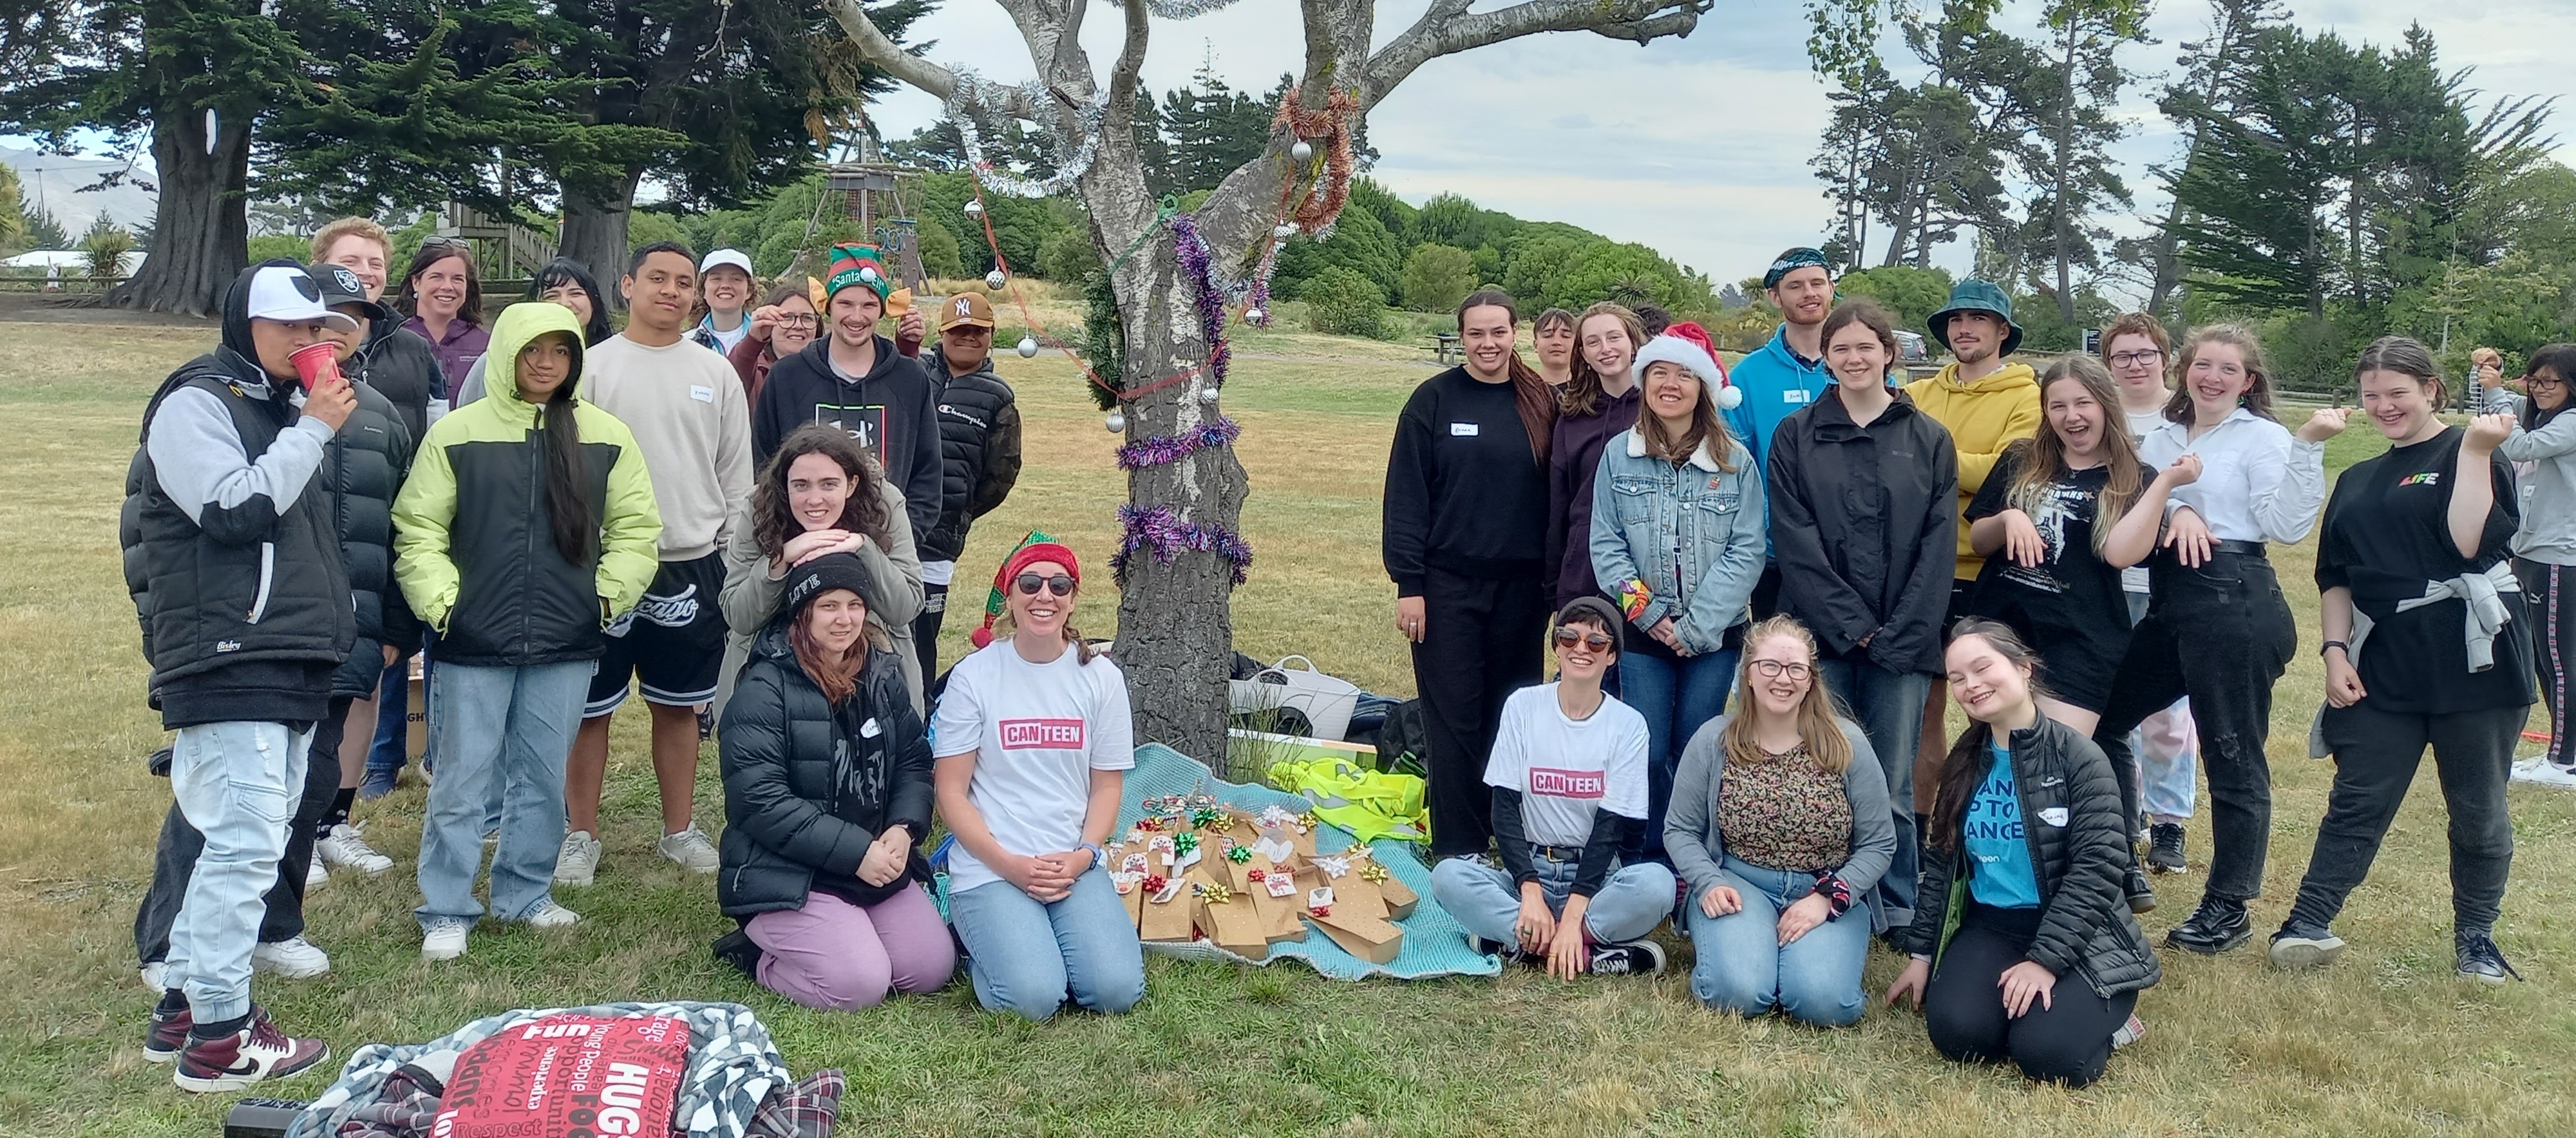 Rangatahi impacted by cancer enjoying a hub day in Christchurch